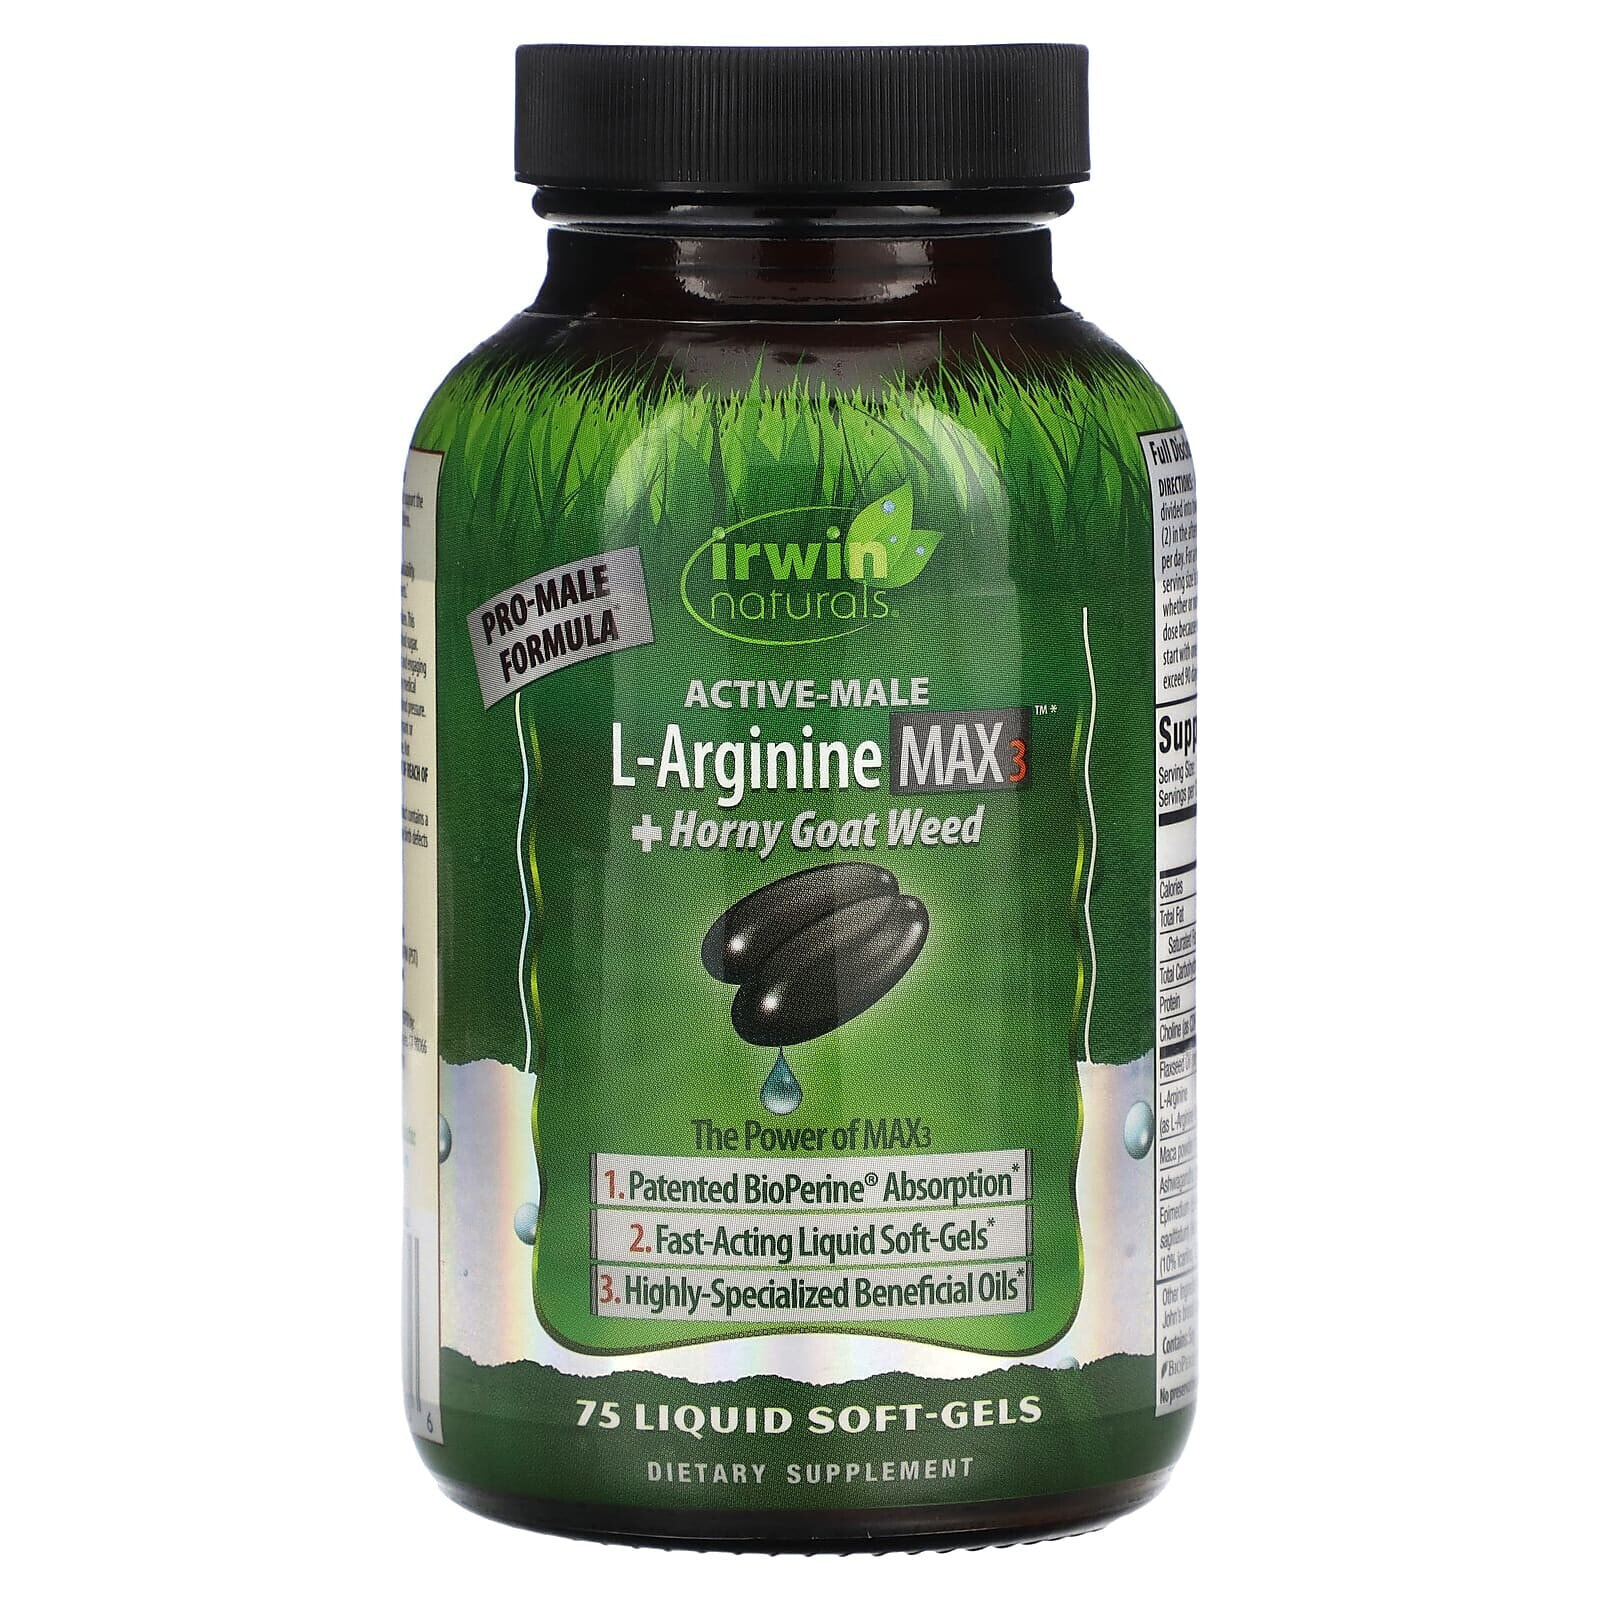 Active-Male, L-Arginine Max3 + Horny Goat Weed, 75 Liquid Soft-Gels